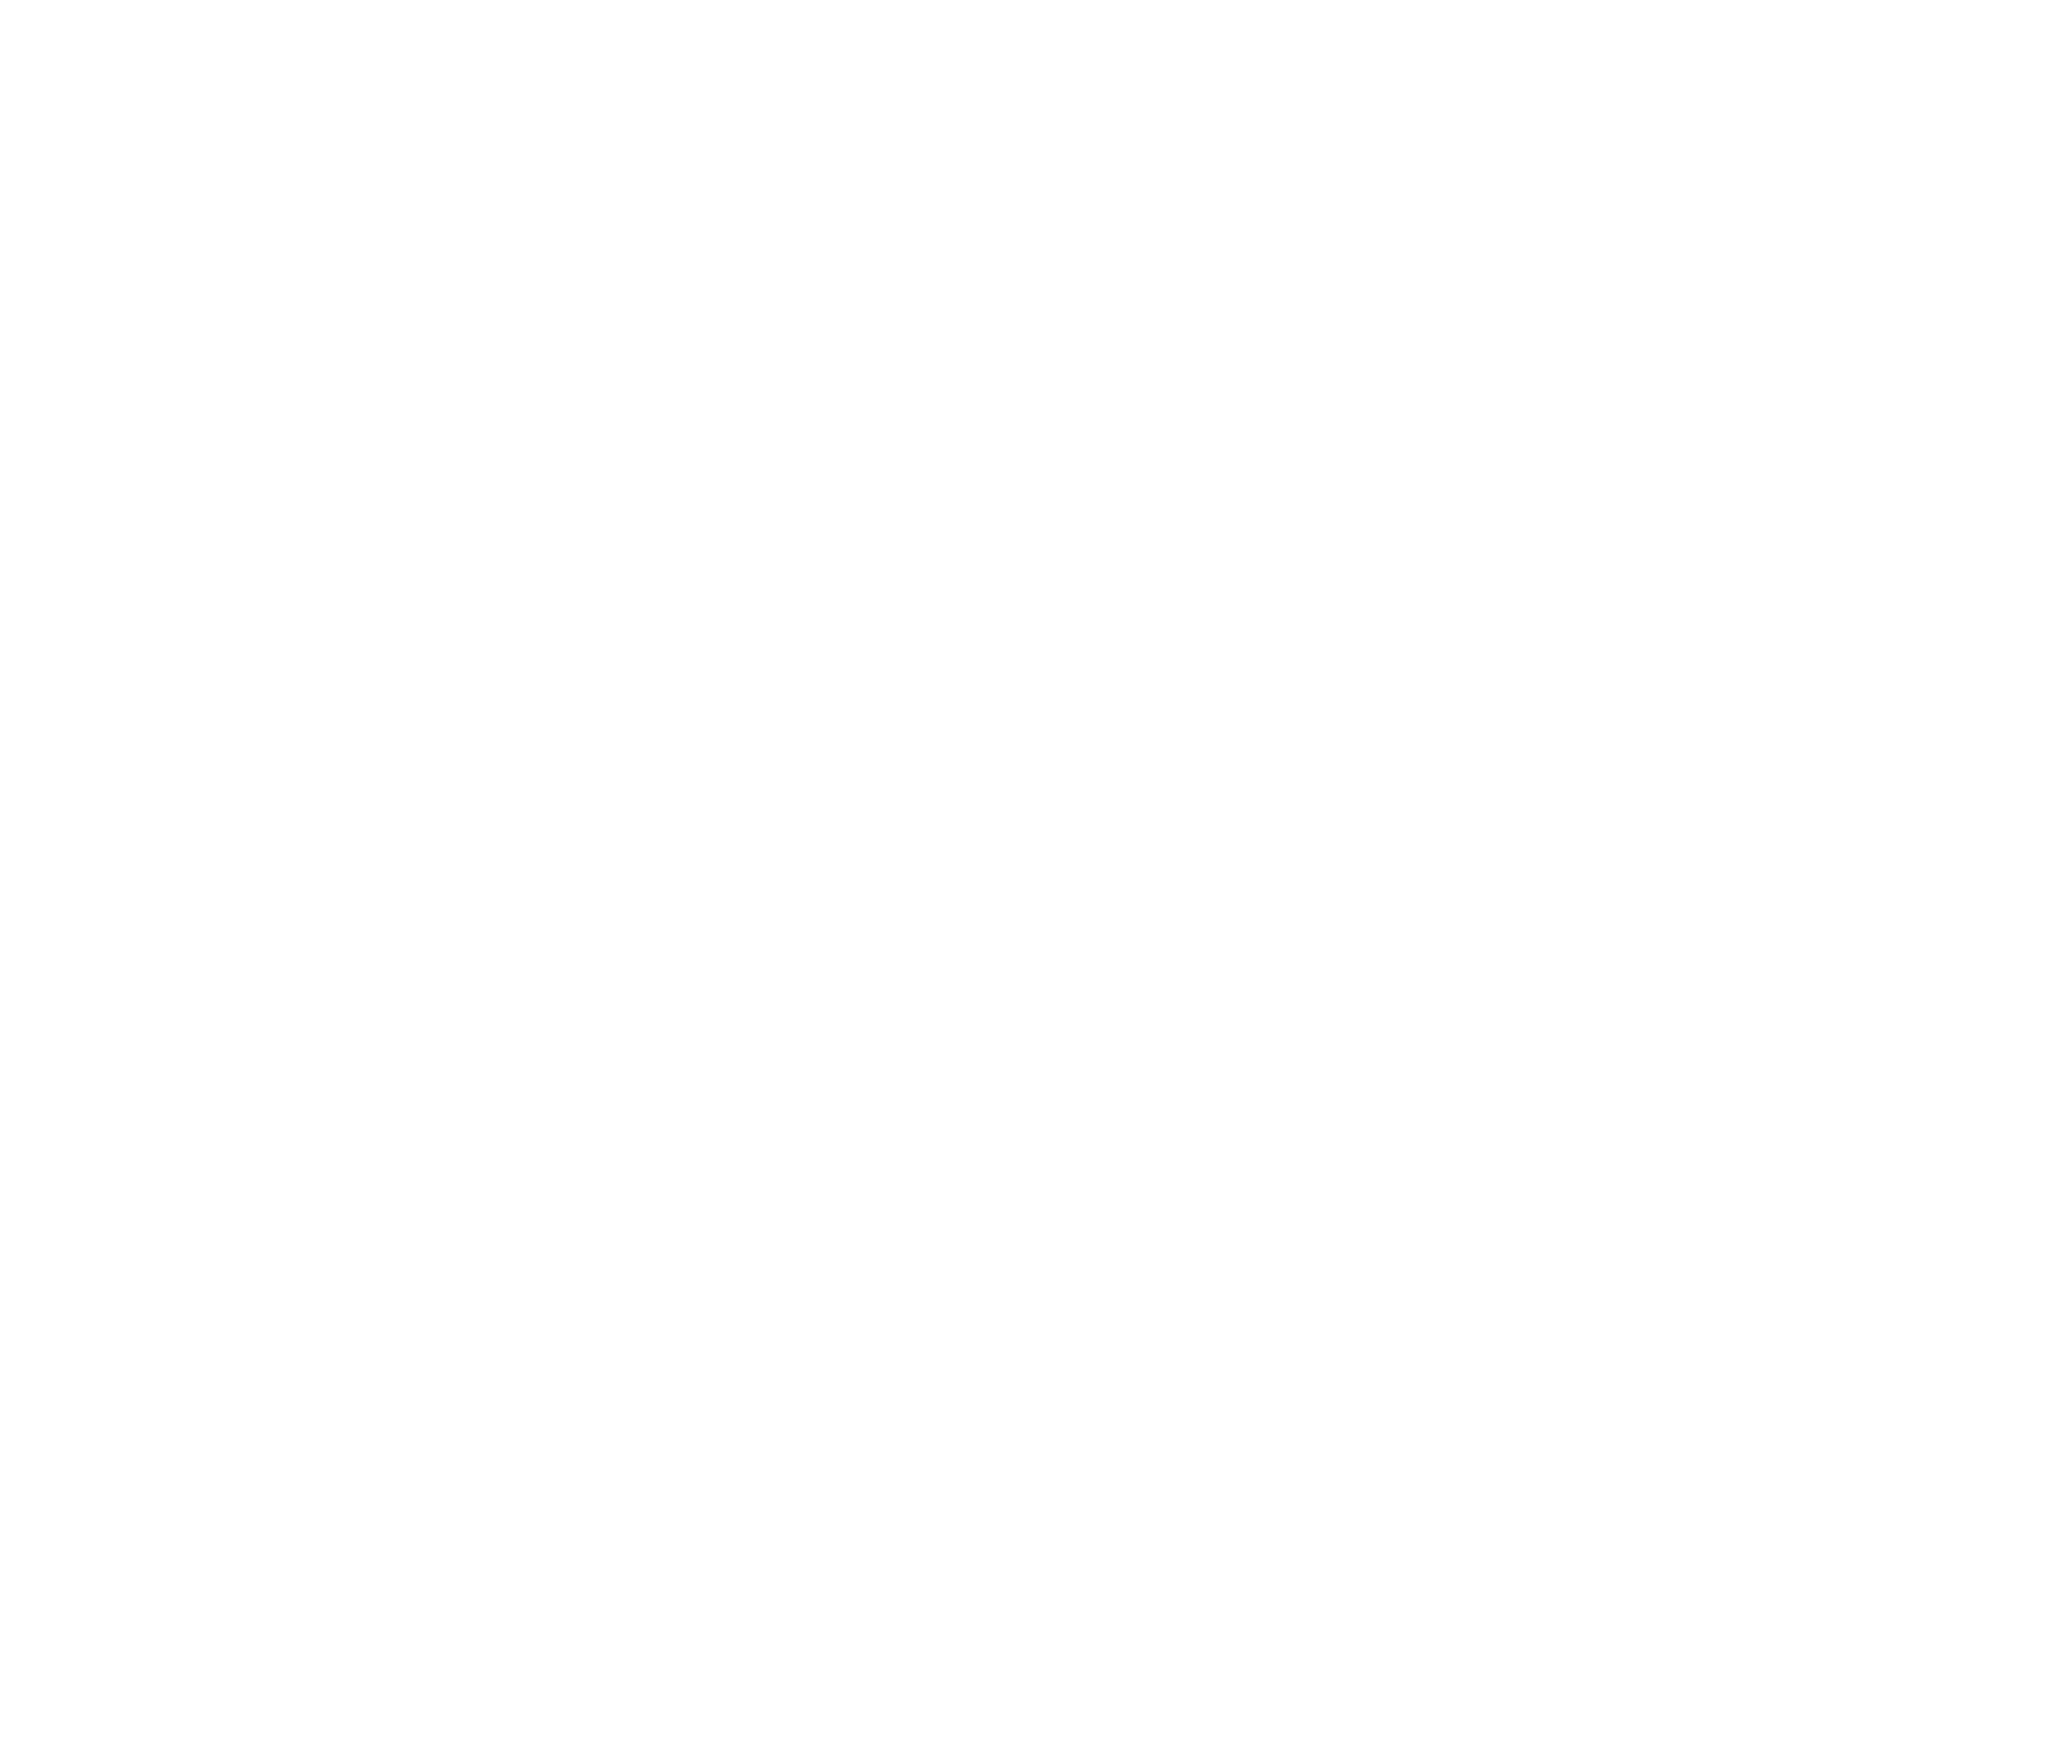 BOSS Church 